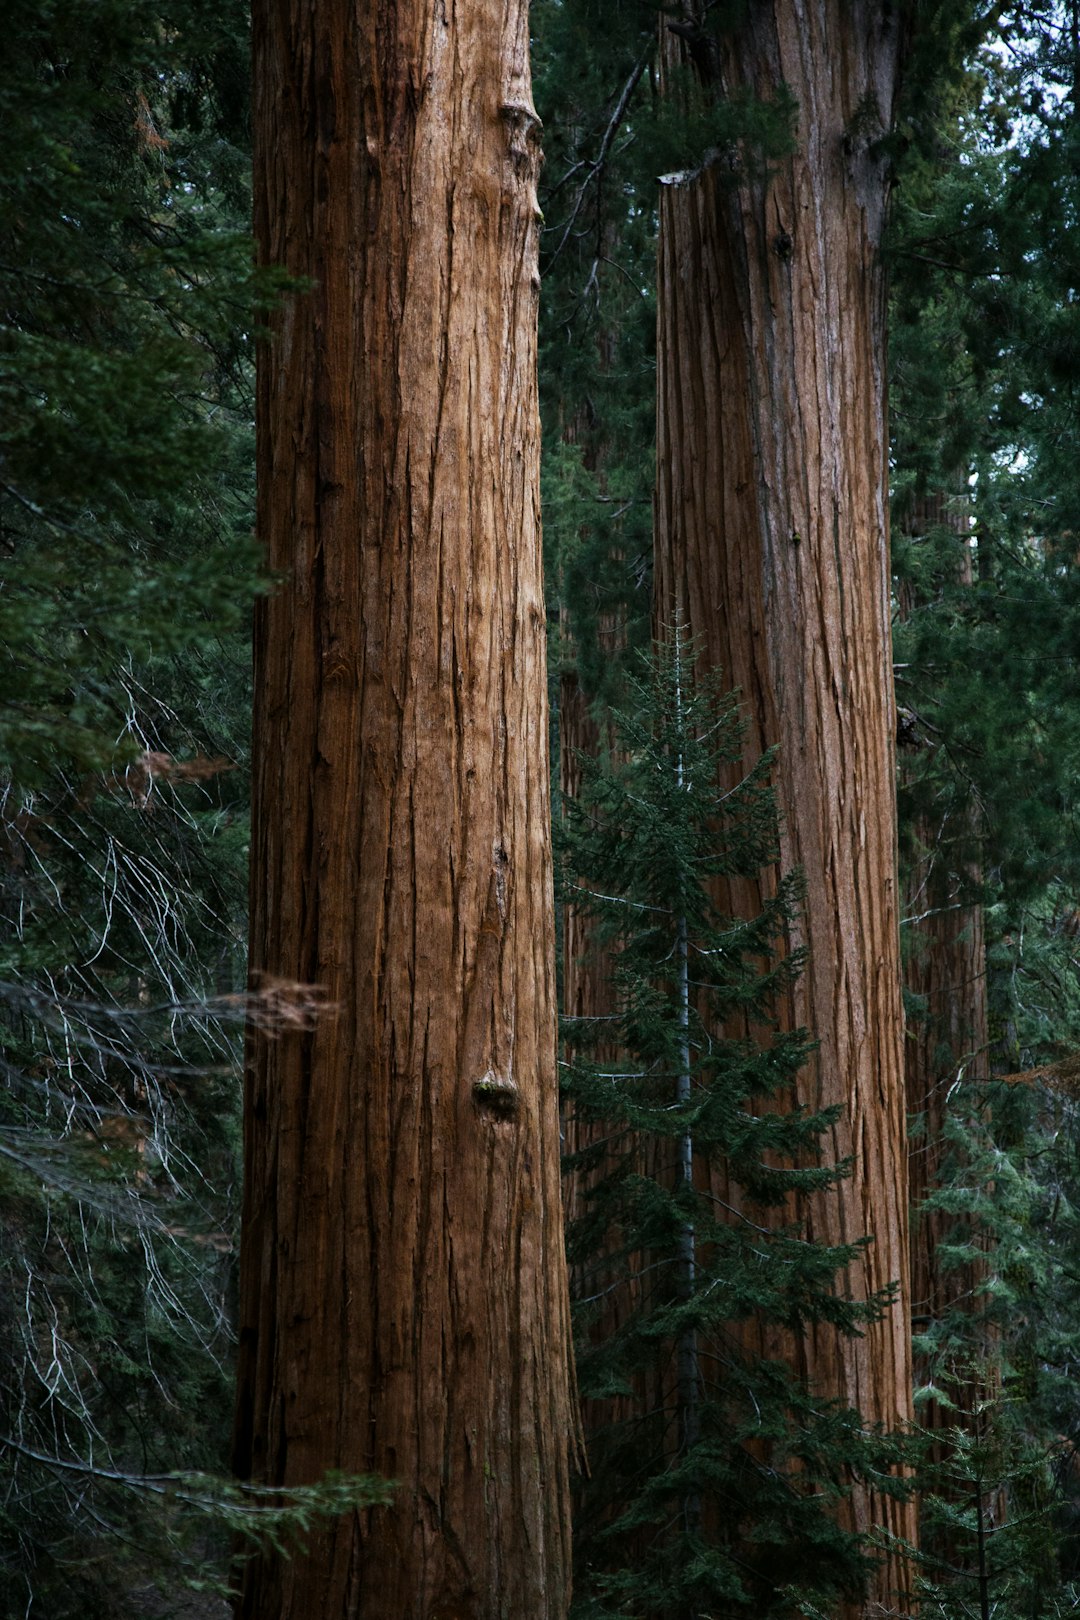 Giants of Sequoia